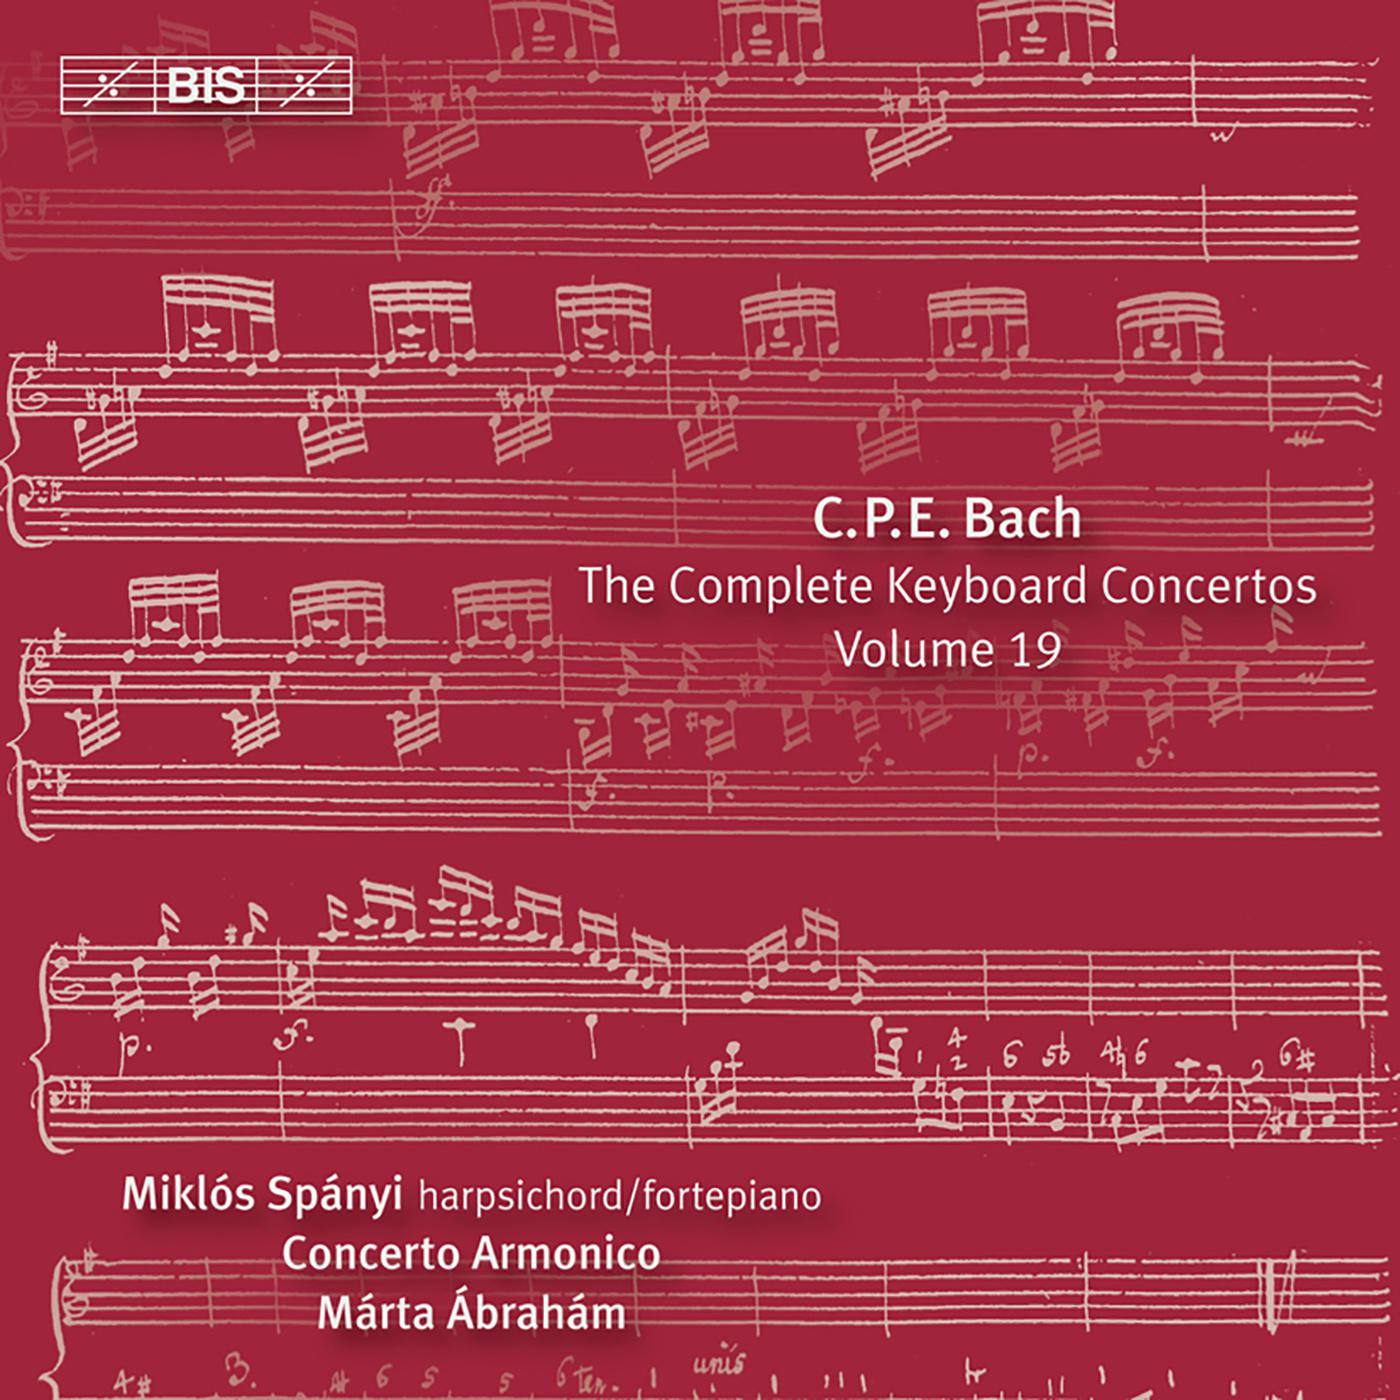 BACH, C. P. E.: Keyboard Concertos Complete, Vol. 19 Spa nyi, Concerto Armonico Budapest  Keyboard Concertos, Wq. 43 56, 44, 45